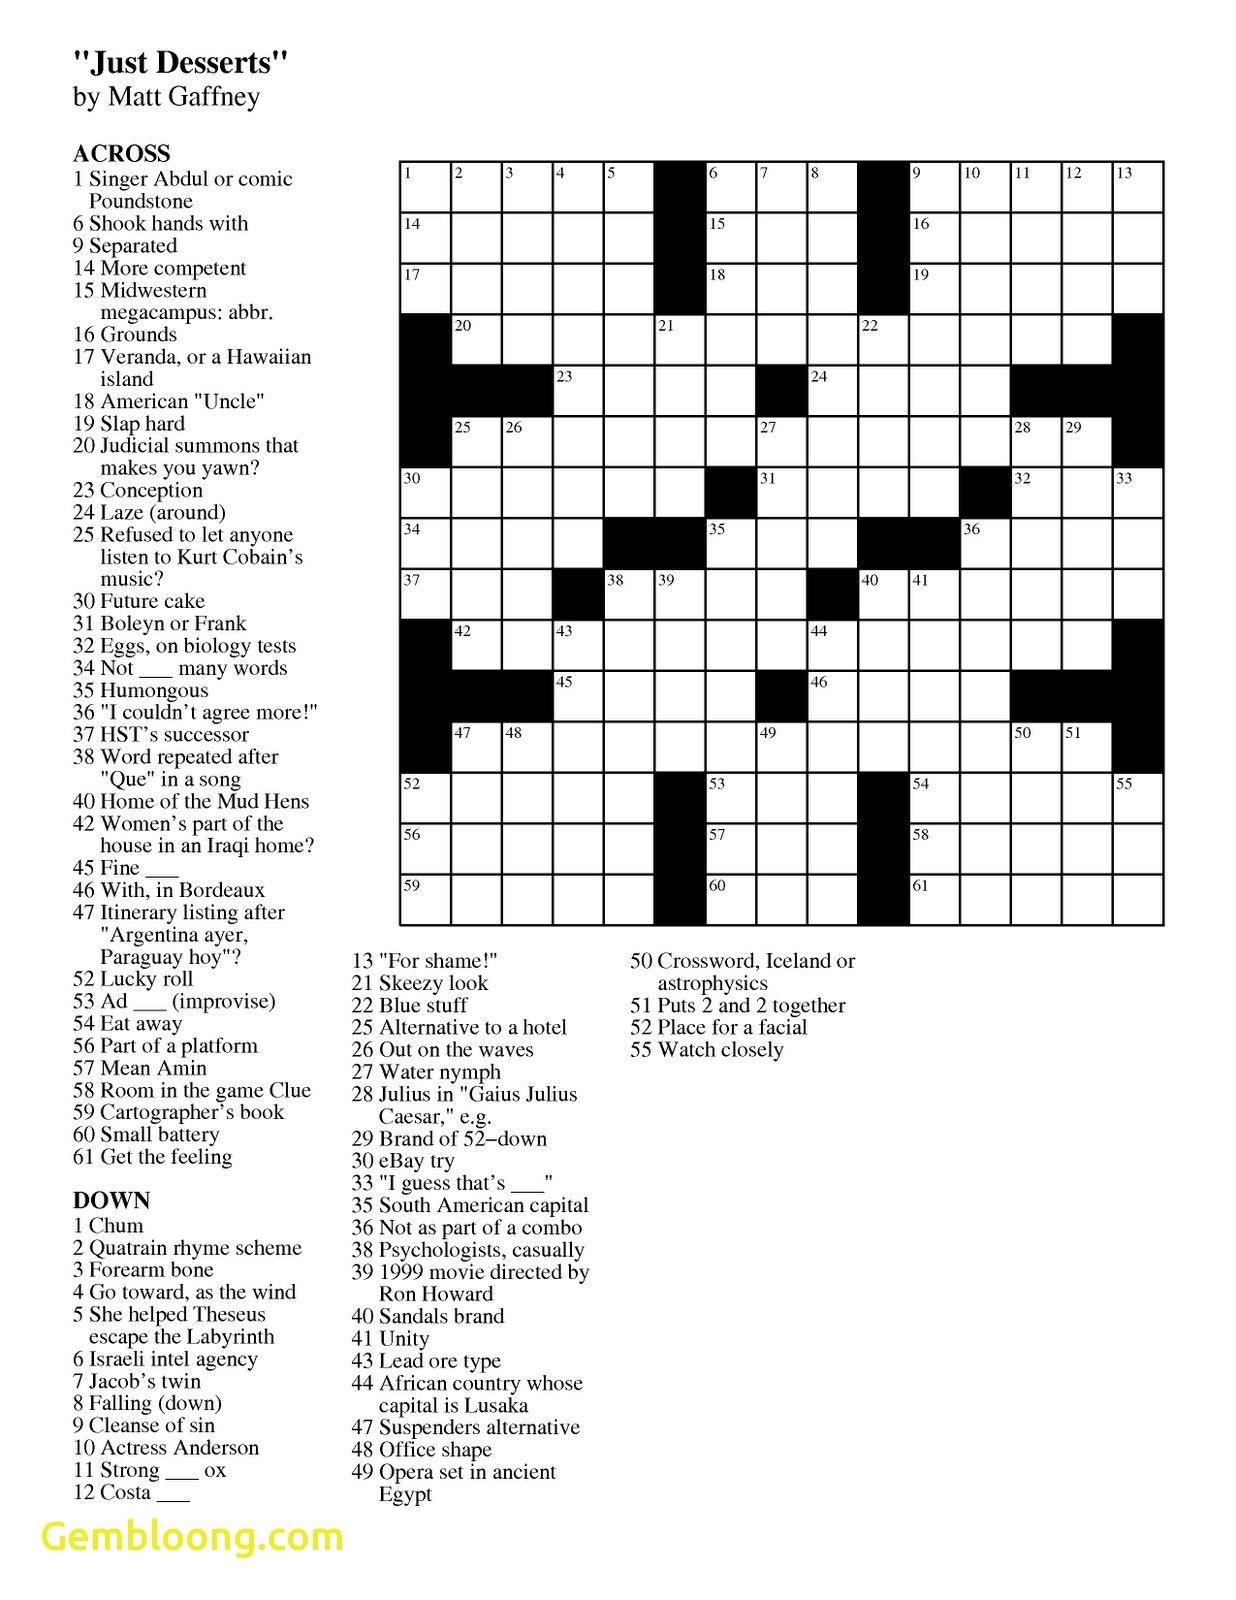 Today's Printable Crossword Puzzle